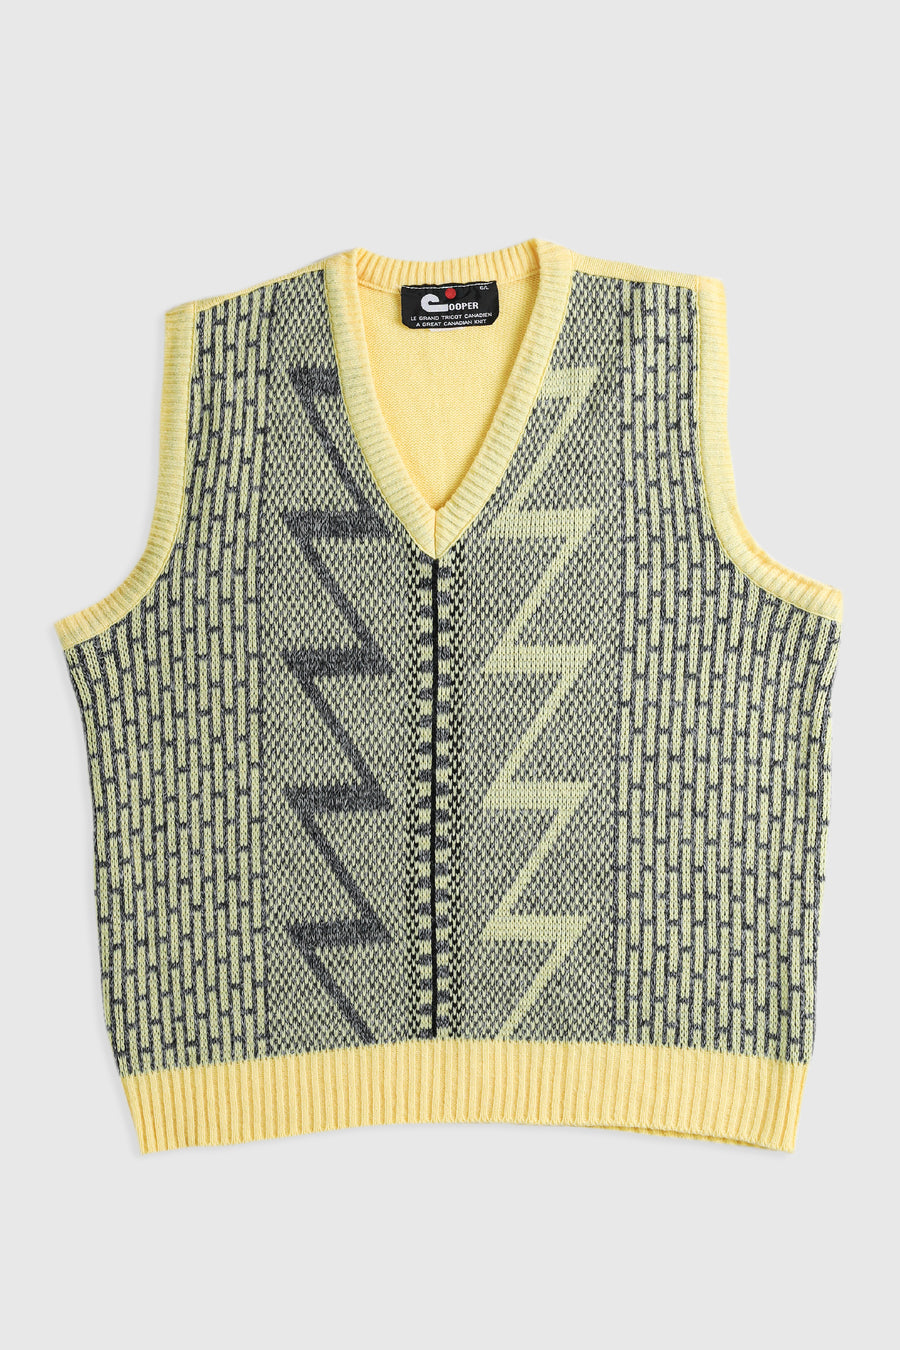 Vintage Knit Sweater Vest